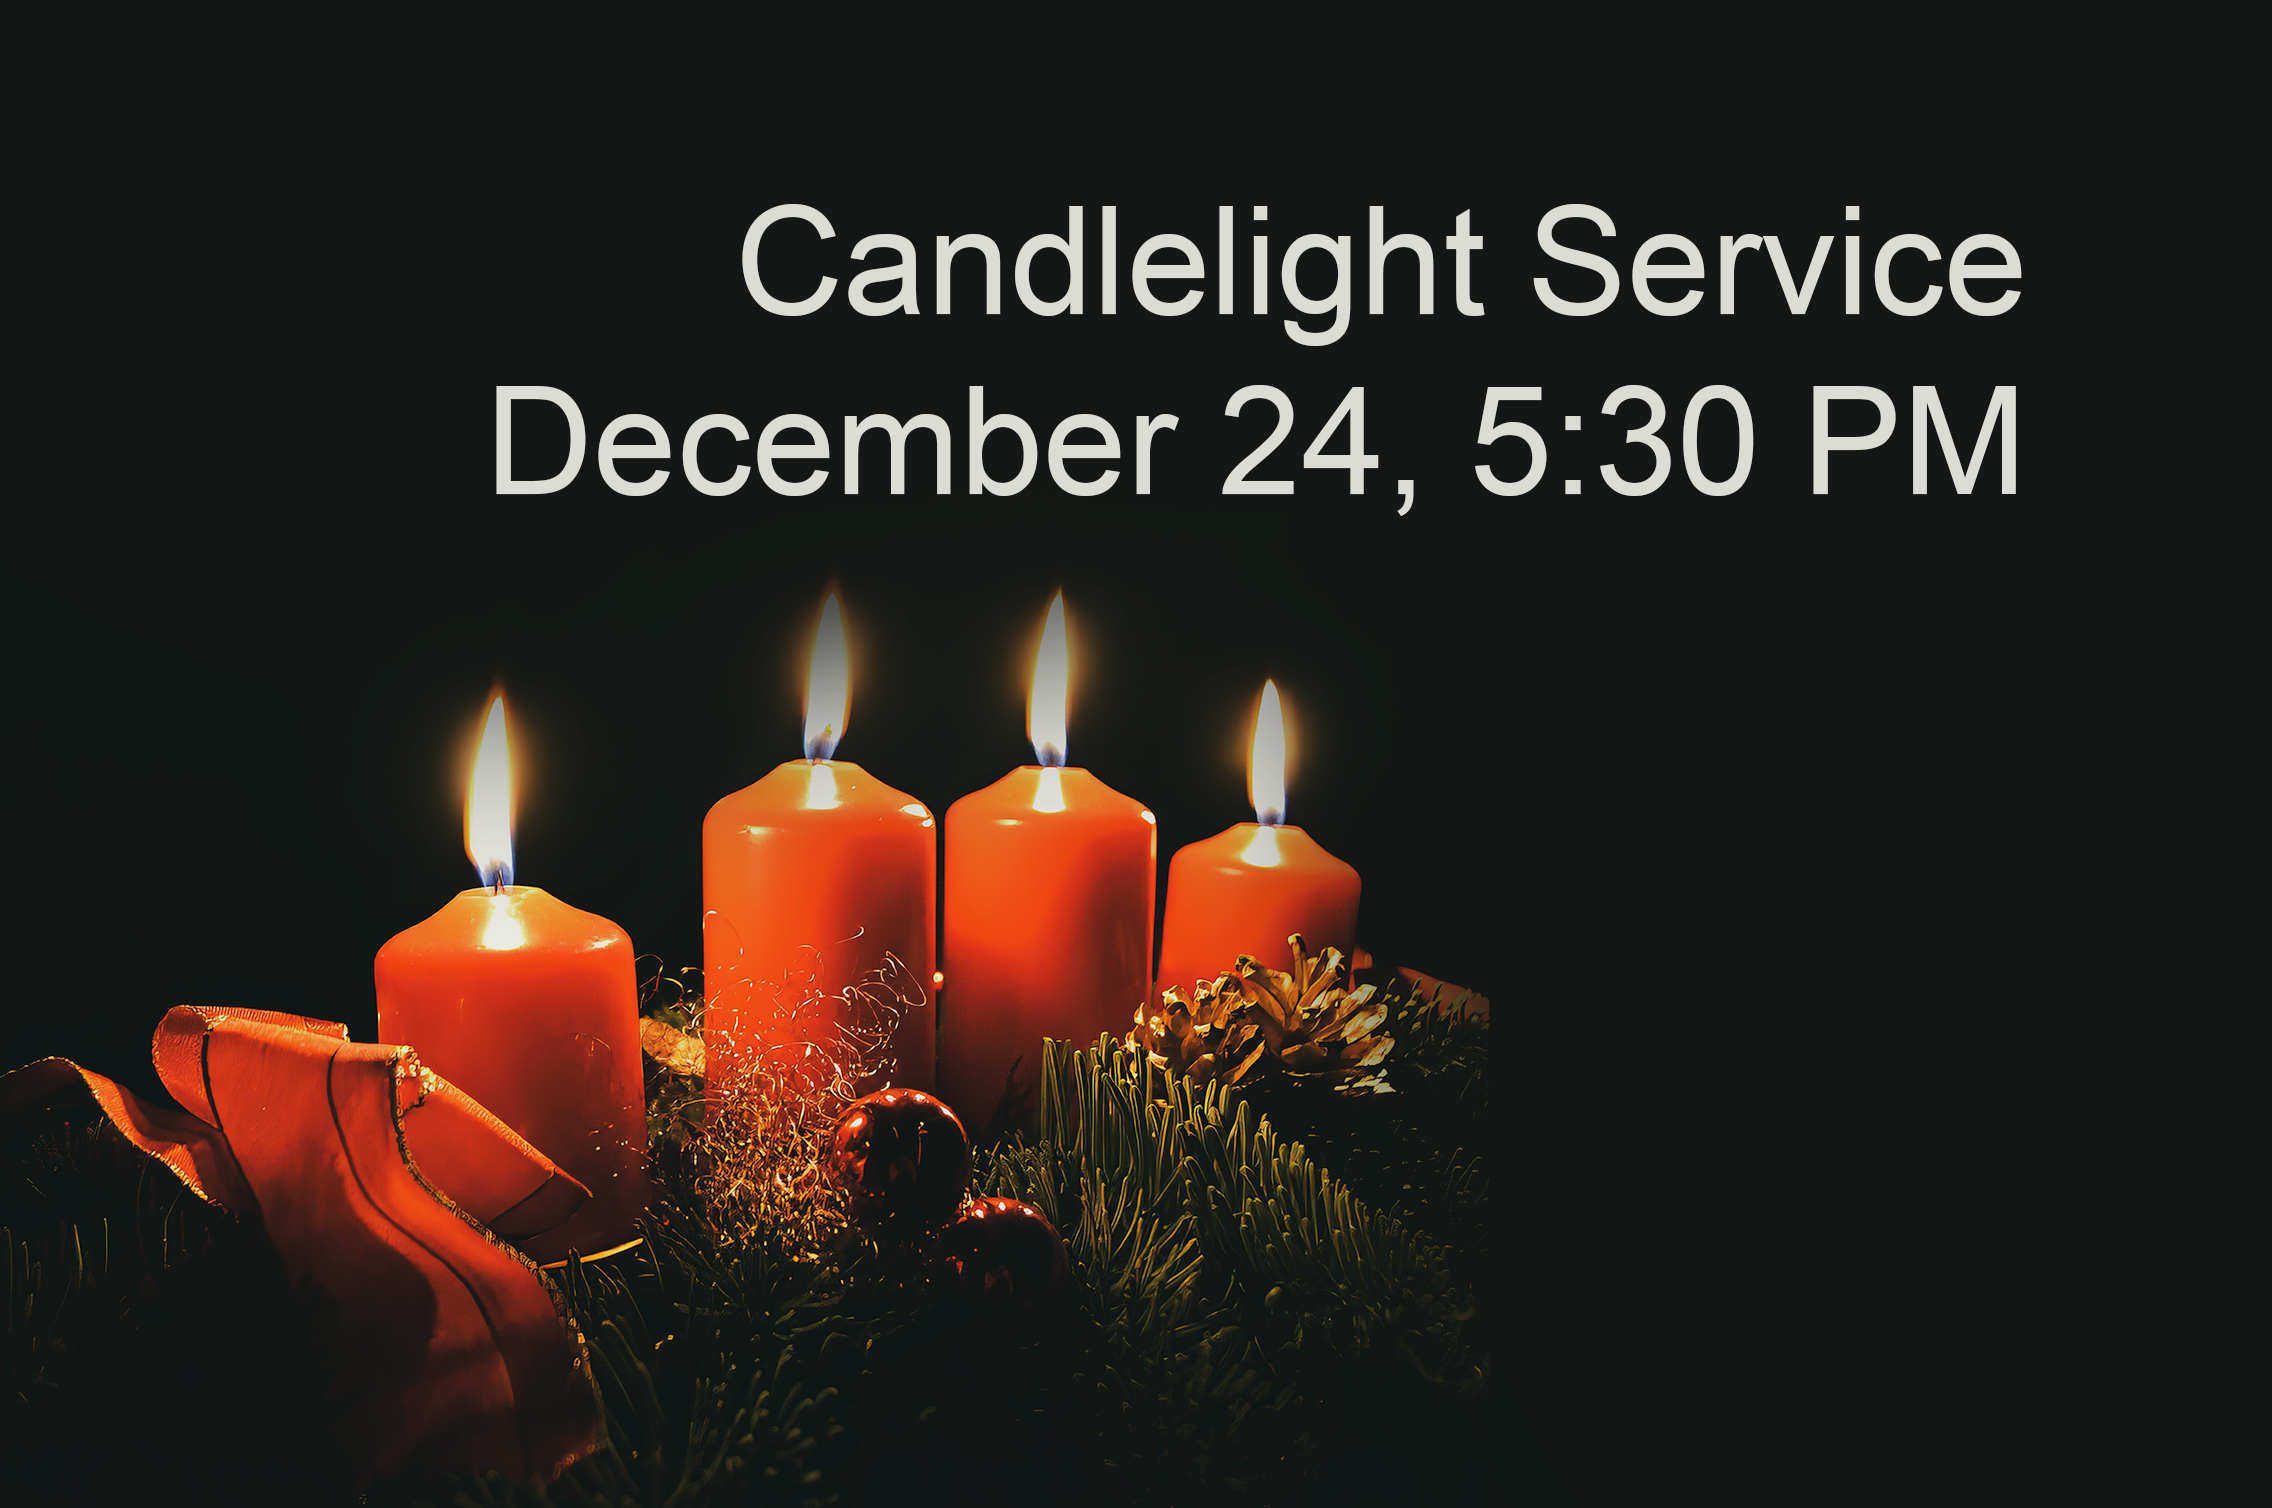 Christmas-Eve-Candlelight-Service-Invitation-Square1-topaz-denoise-enhance-2.5x-sharpen-Event image